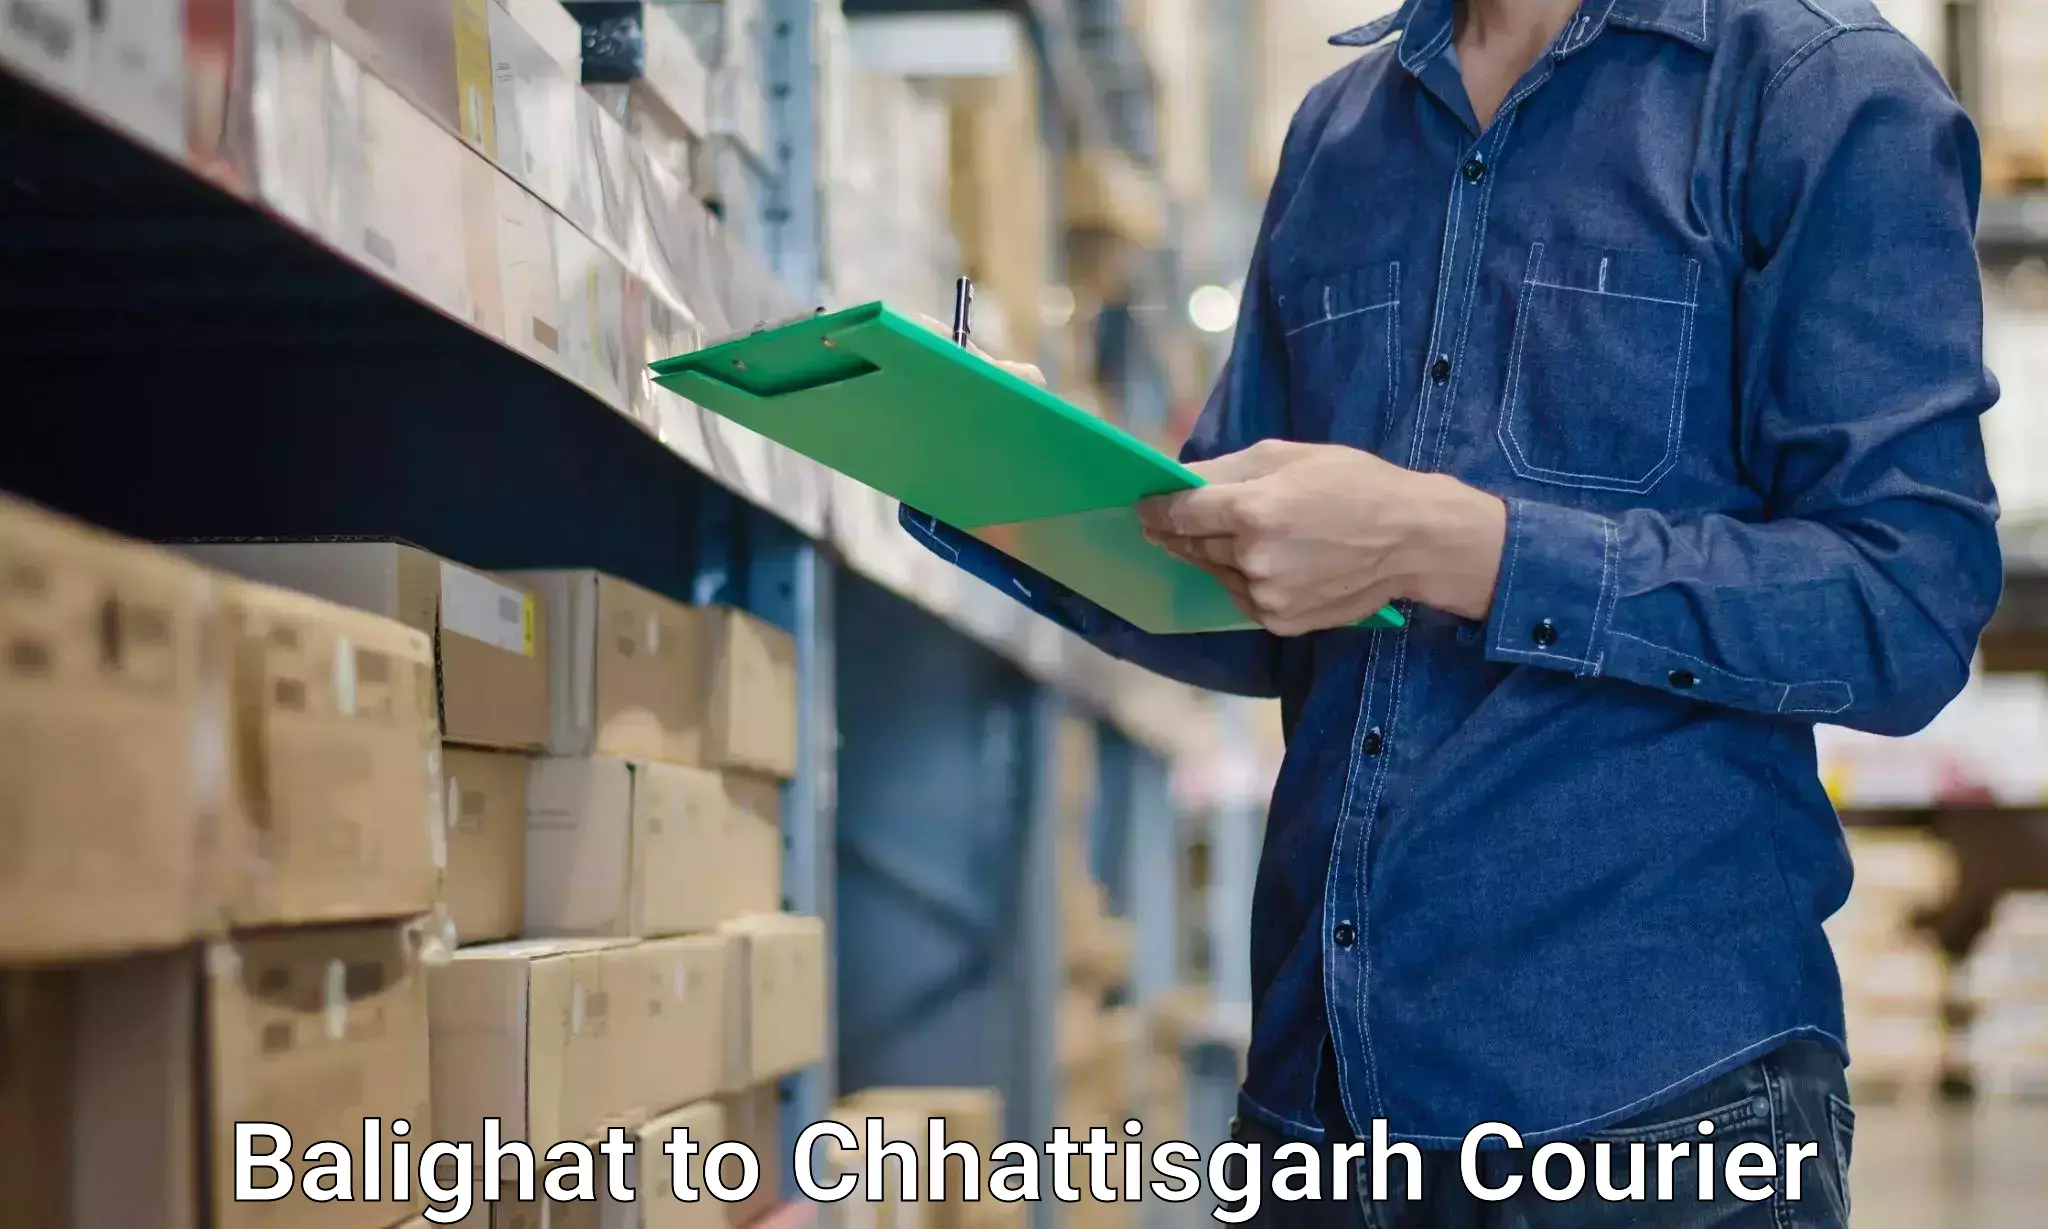 Professional movers and packers Balighat to Raigarh Chhattisgarh